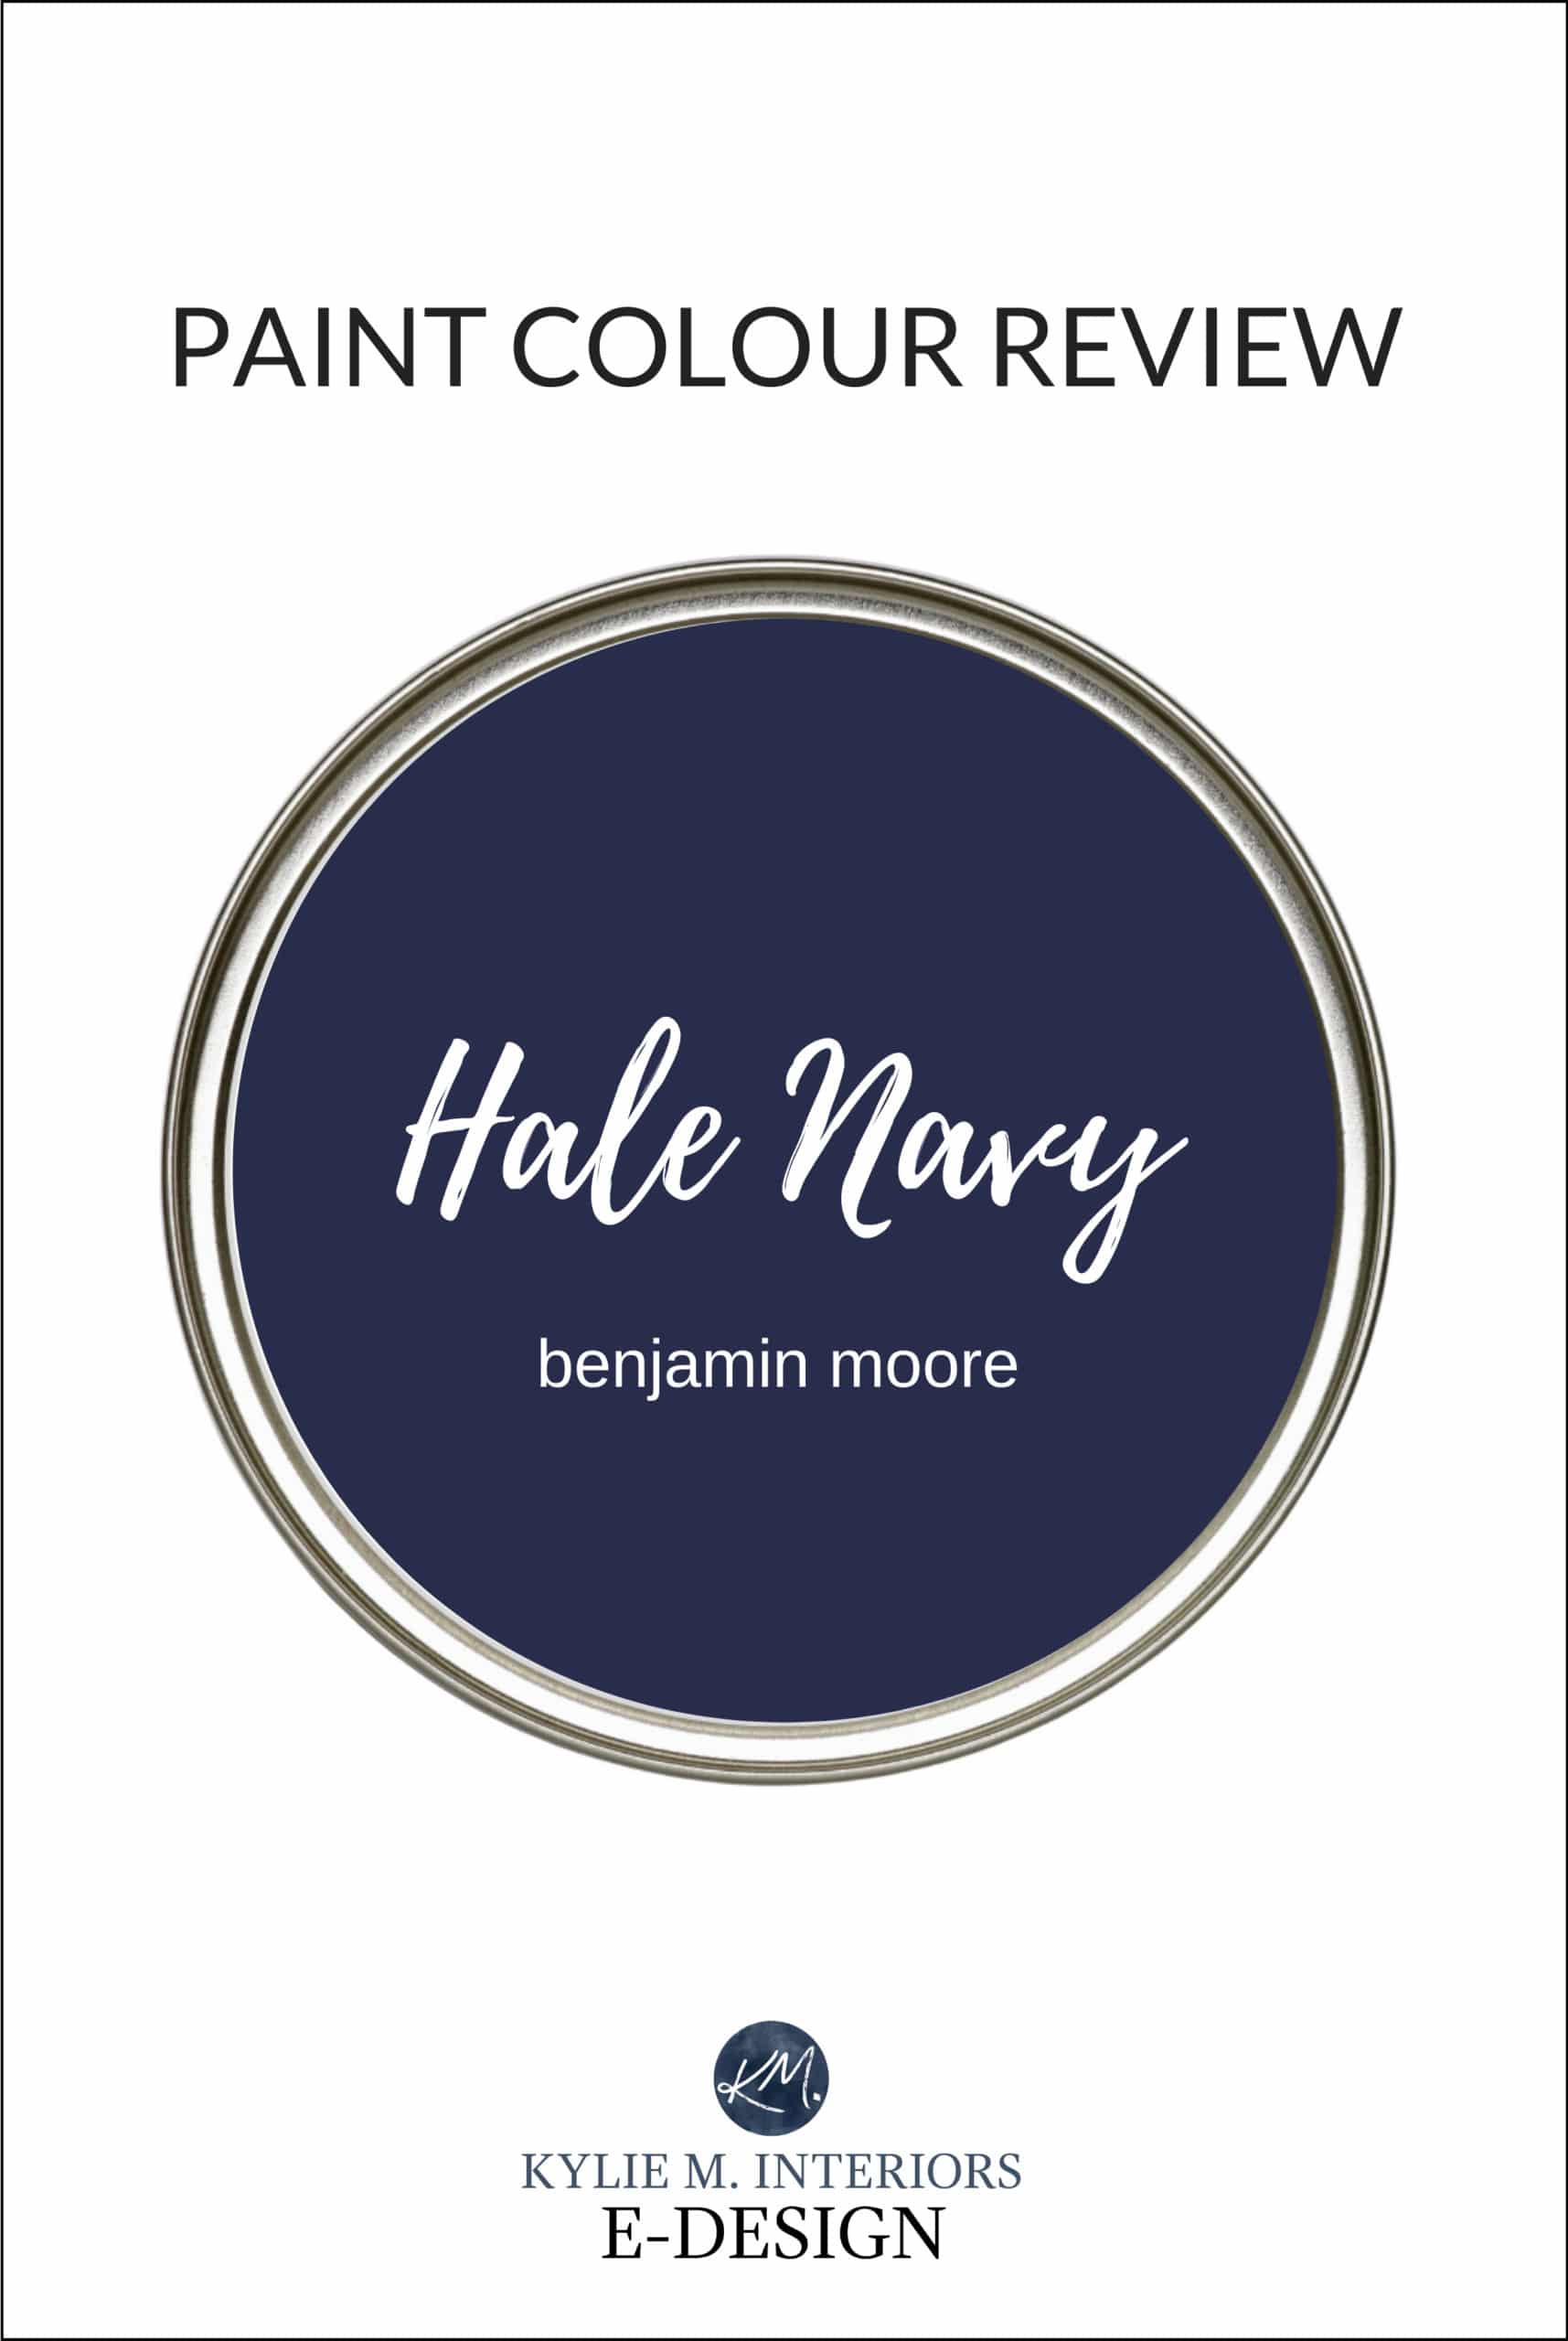 Paint colour review, best navy blue paint colour, Benjamin Moore Hale Navy. Edesign and online paint color consulting, Kylie M Interiors, diy decorative advice